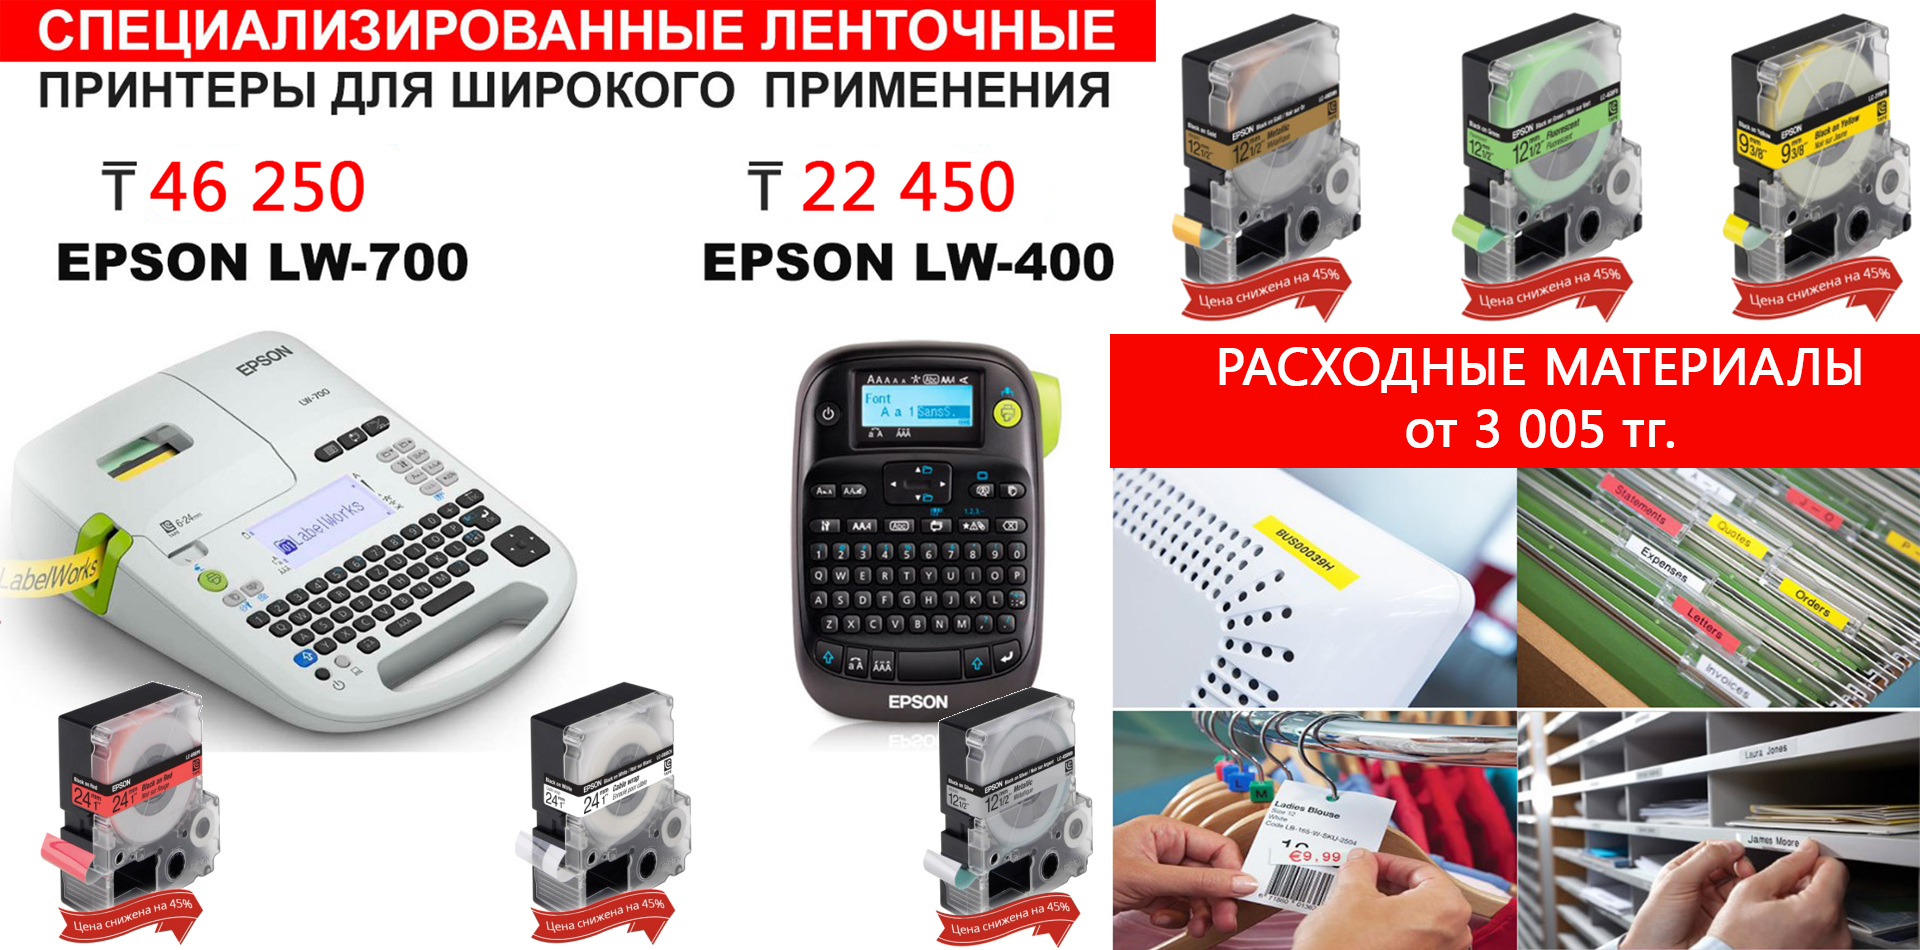 EPSON LW-400